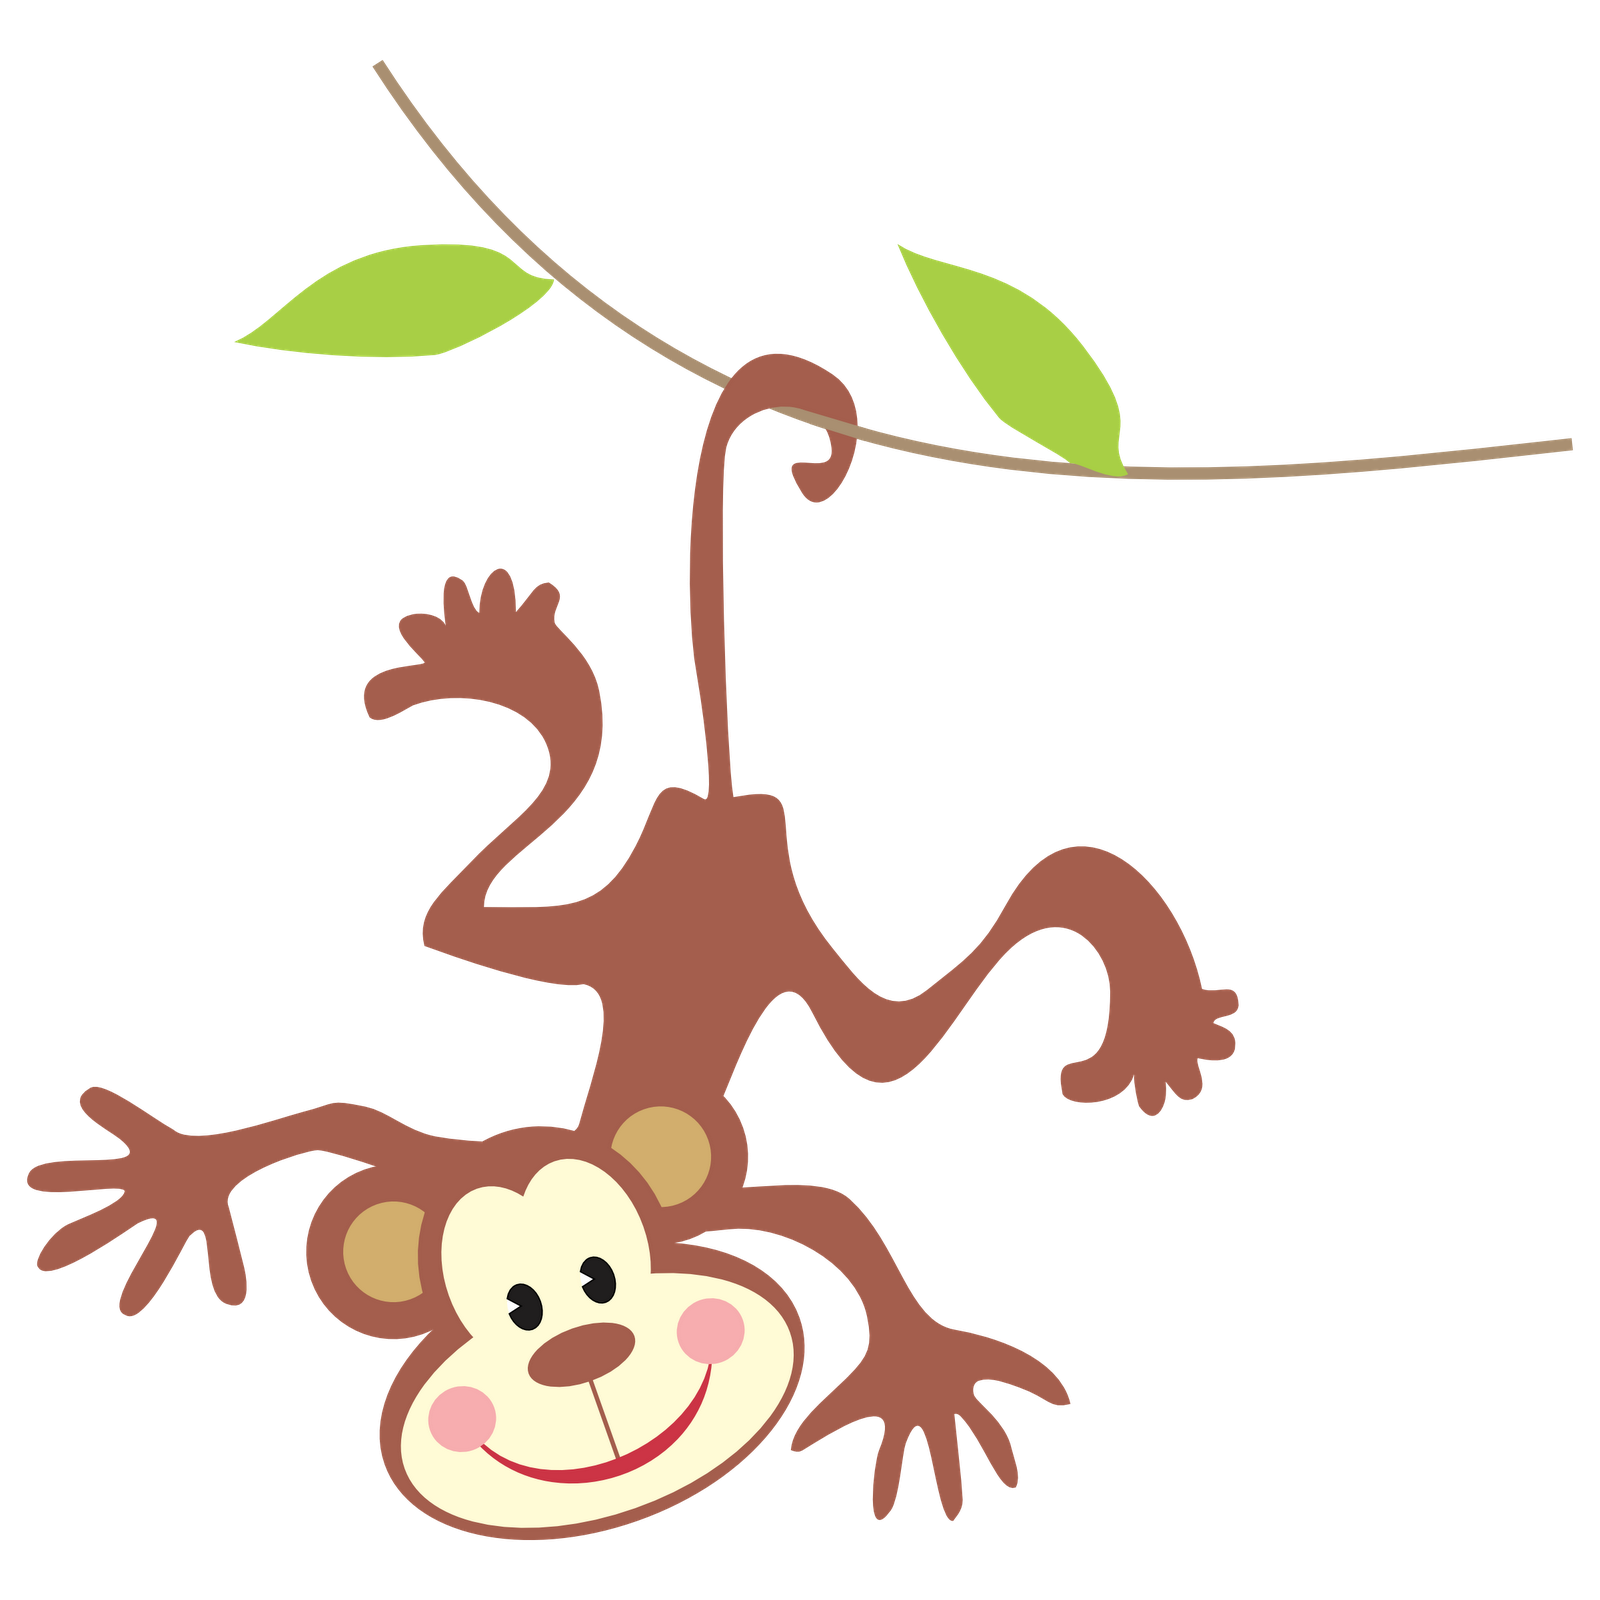 Monkey Clip Art Downloads | Clipart Panda - Free Clipart Images